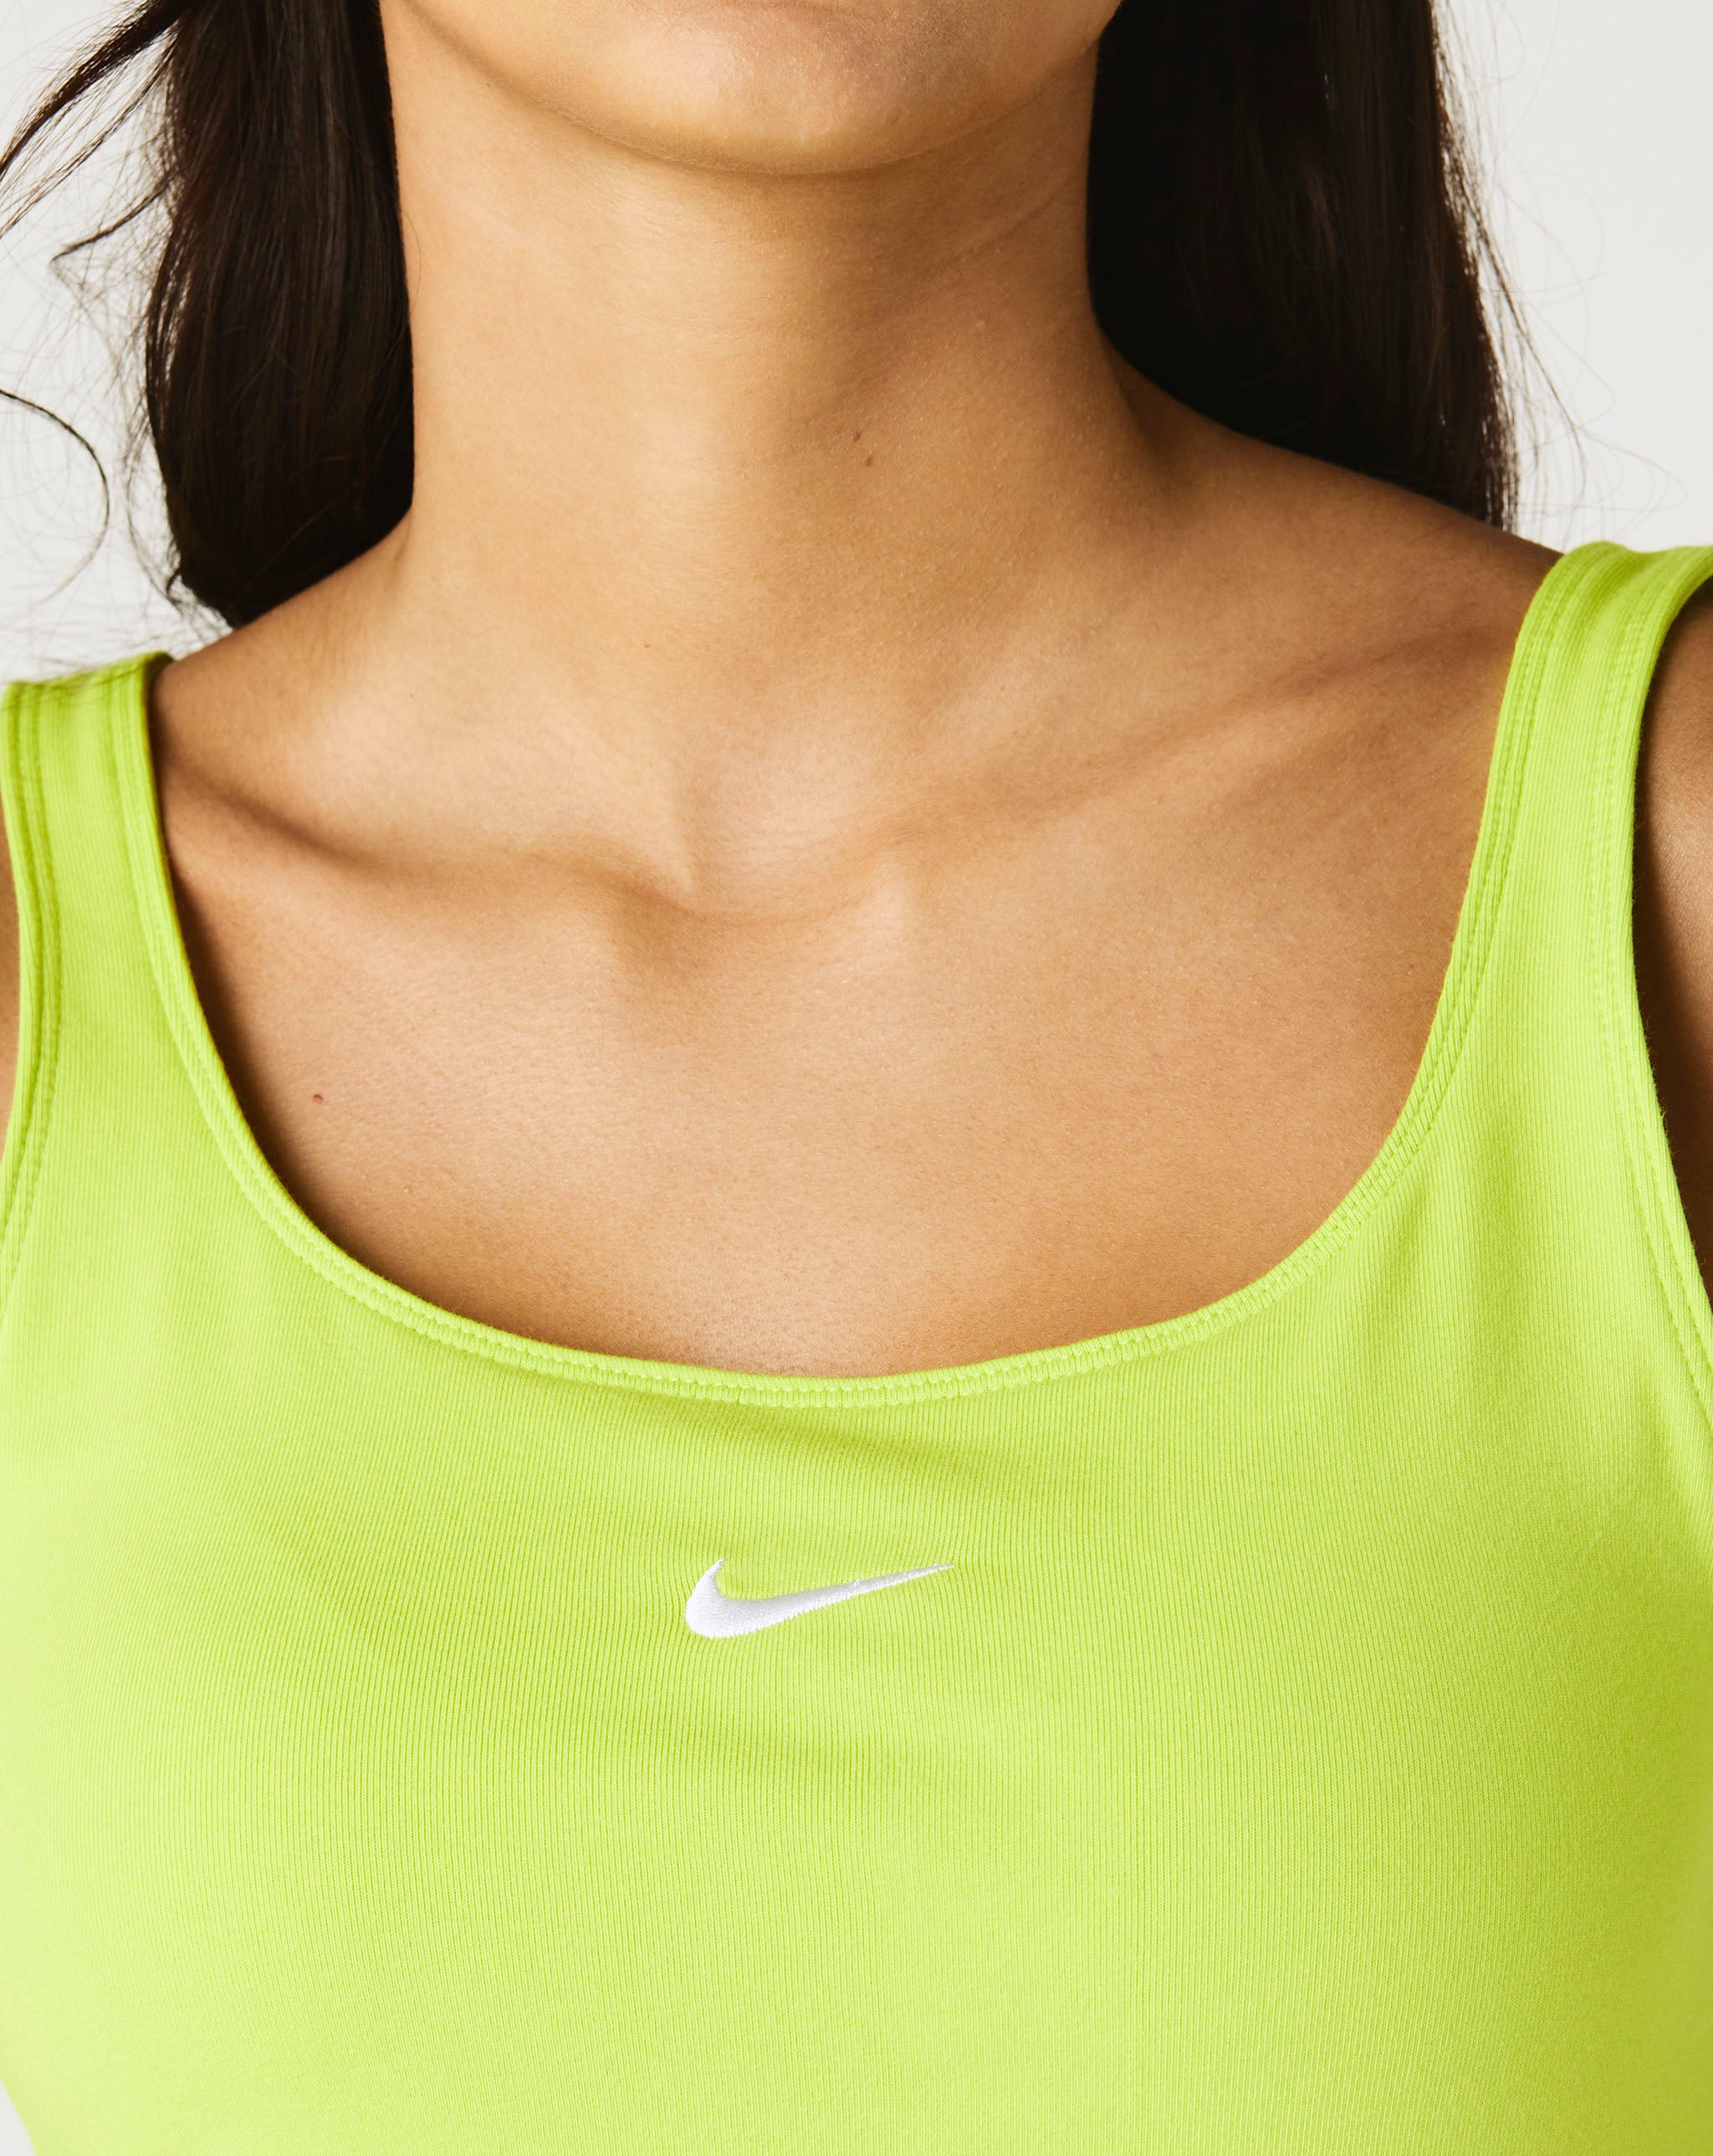 Nike Women's Essential Cami Tank  - Cheap Atelier-lumieres Jordan outlet